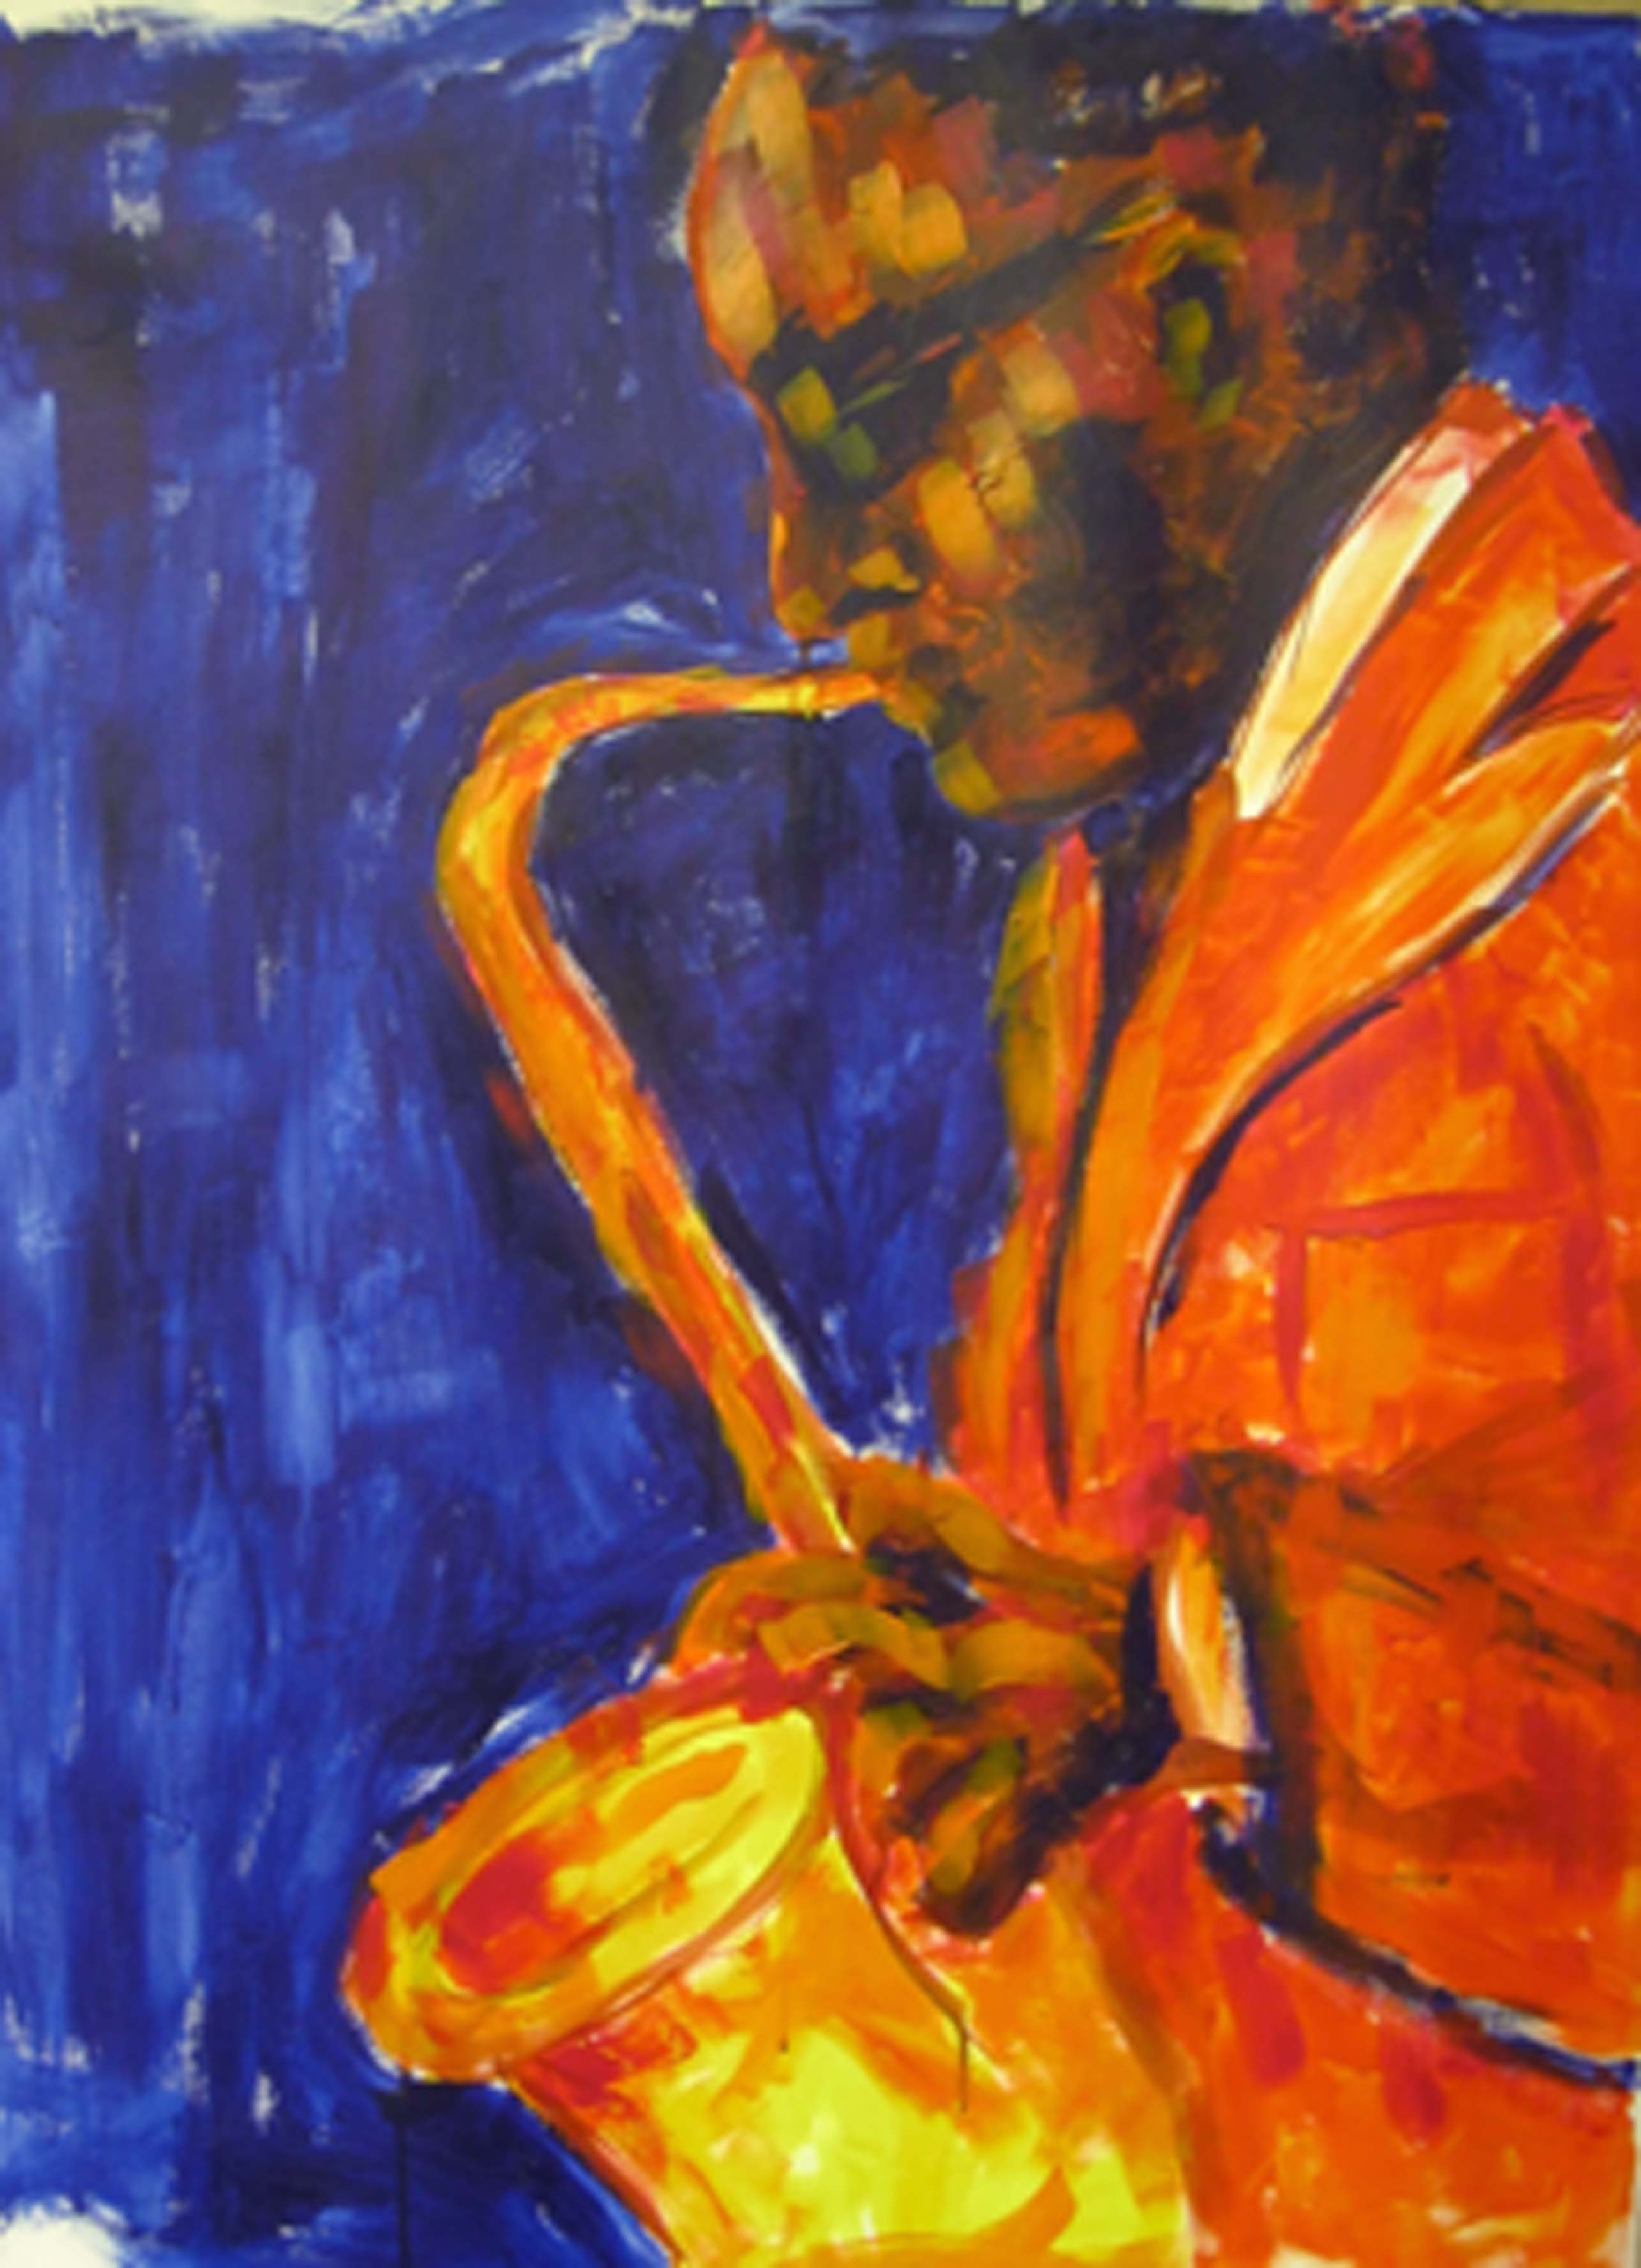 jazz saxophonist, sefton art group artist